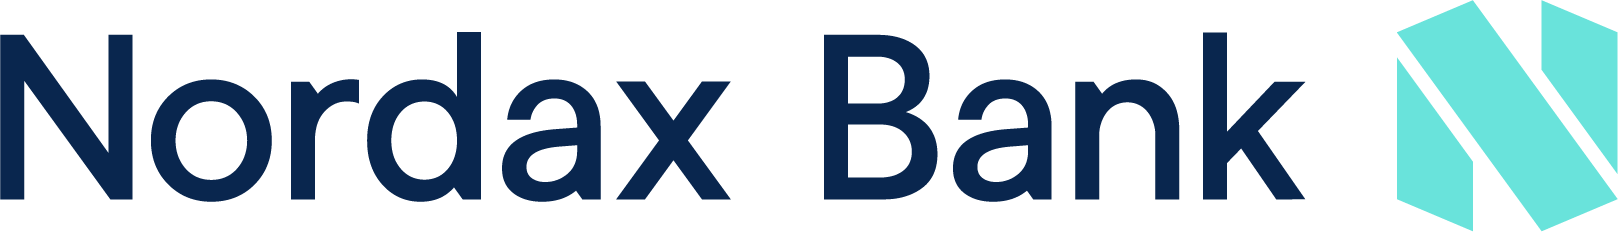 nordax-logo